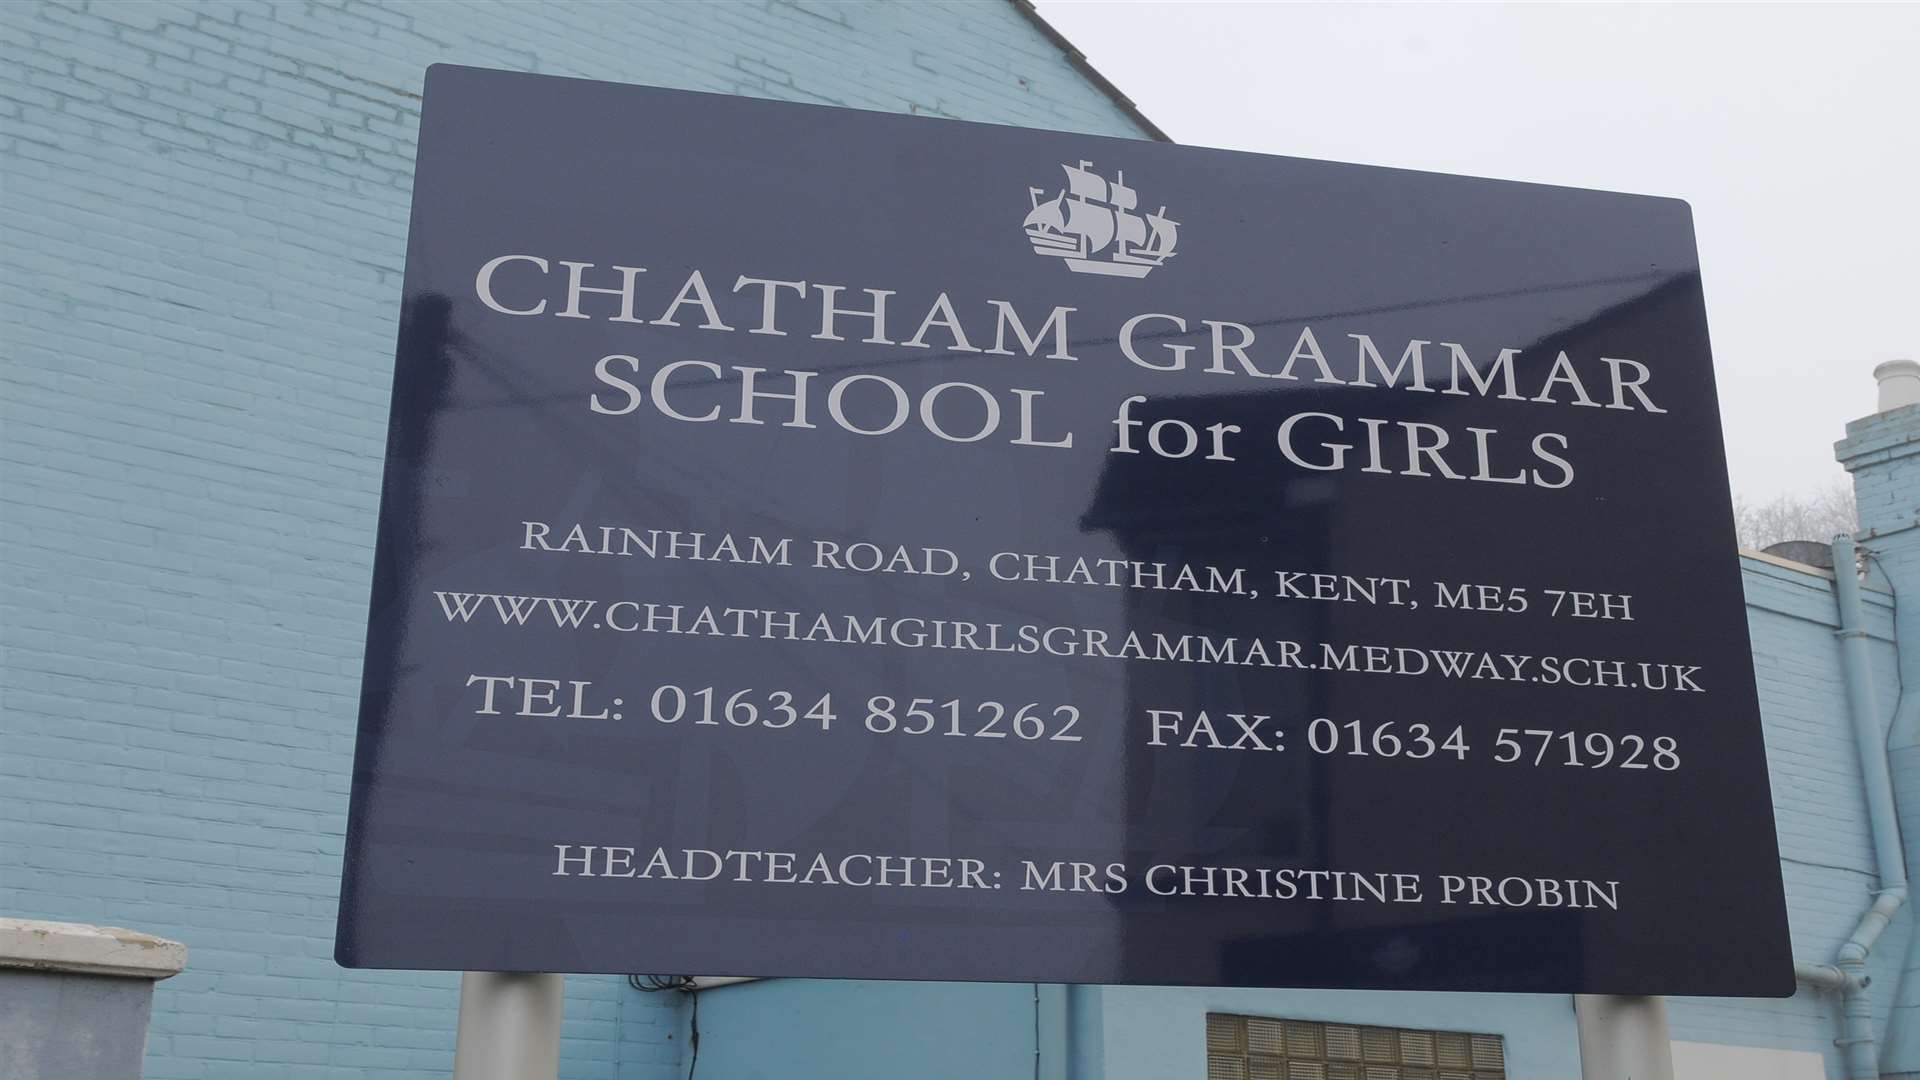 Chatham Grammar School for Girls, Rainham Road, Chatham.